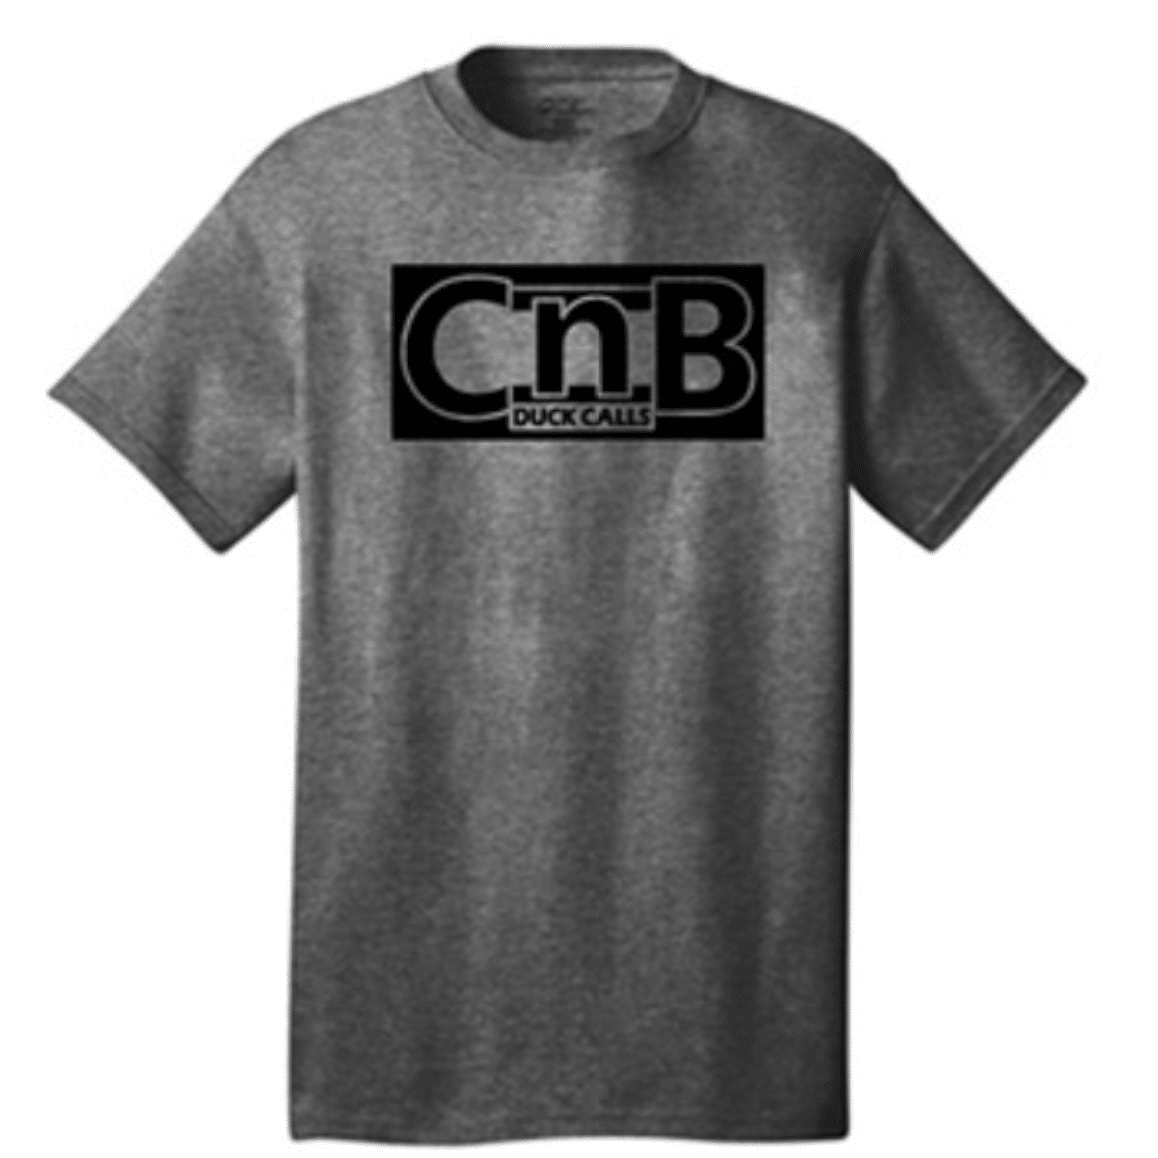 Men's Graphite Heather T-Shirt - CnB Duck Calls